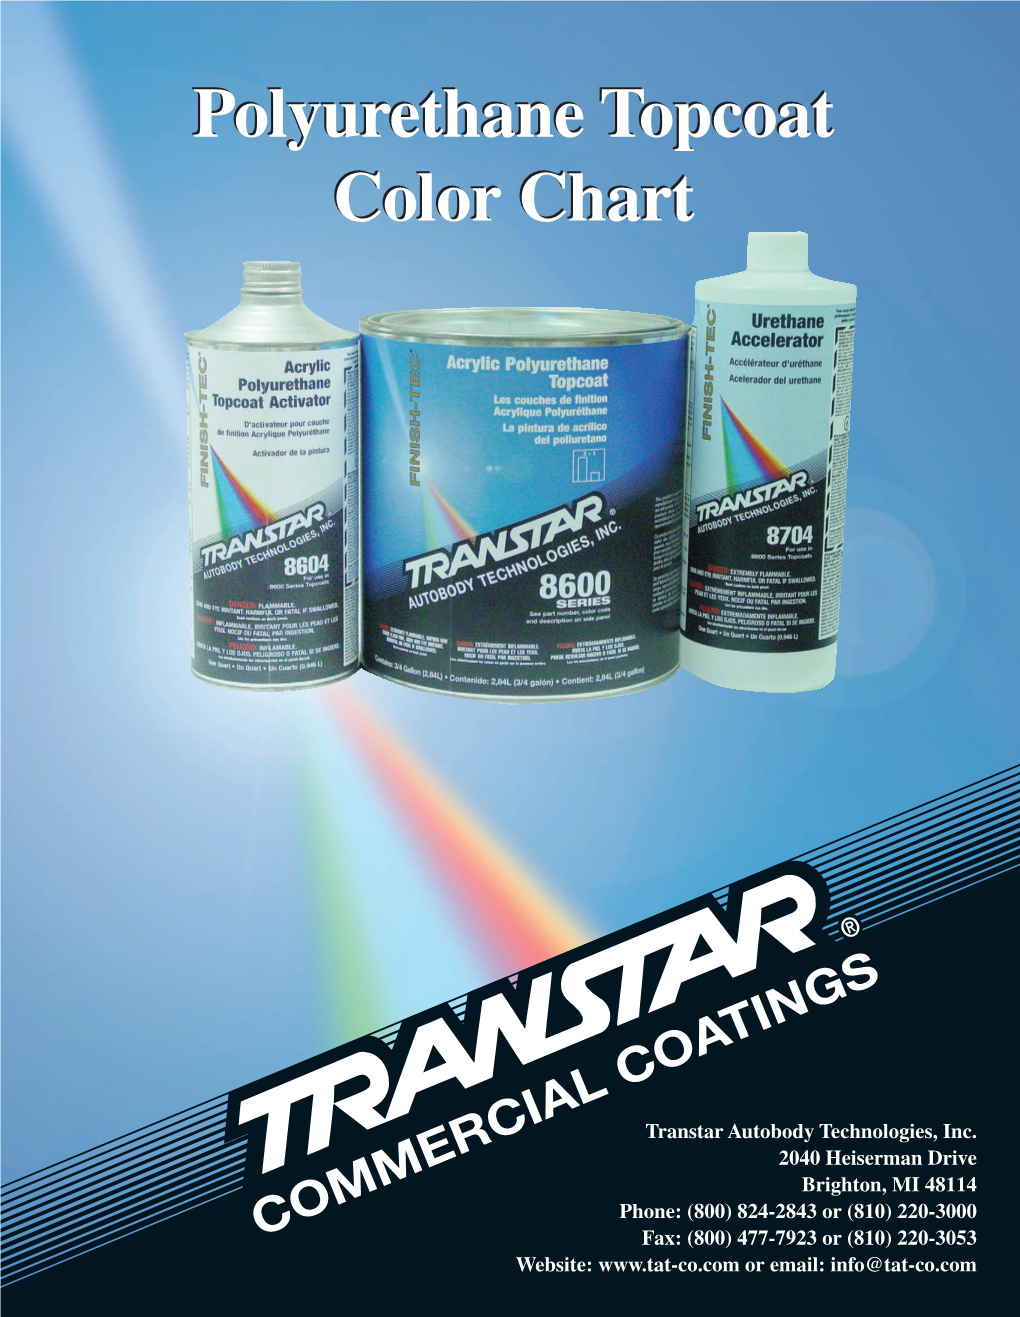 Polyurethane Topcoat Color Chart